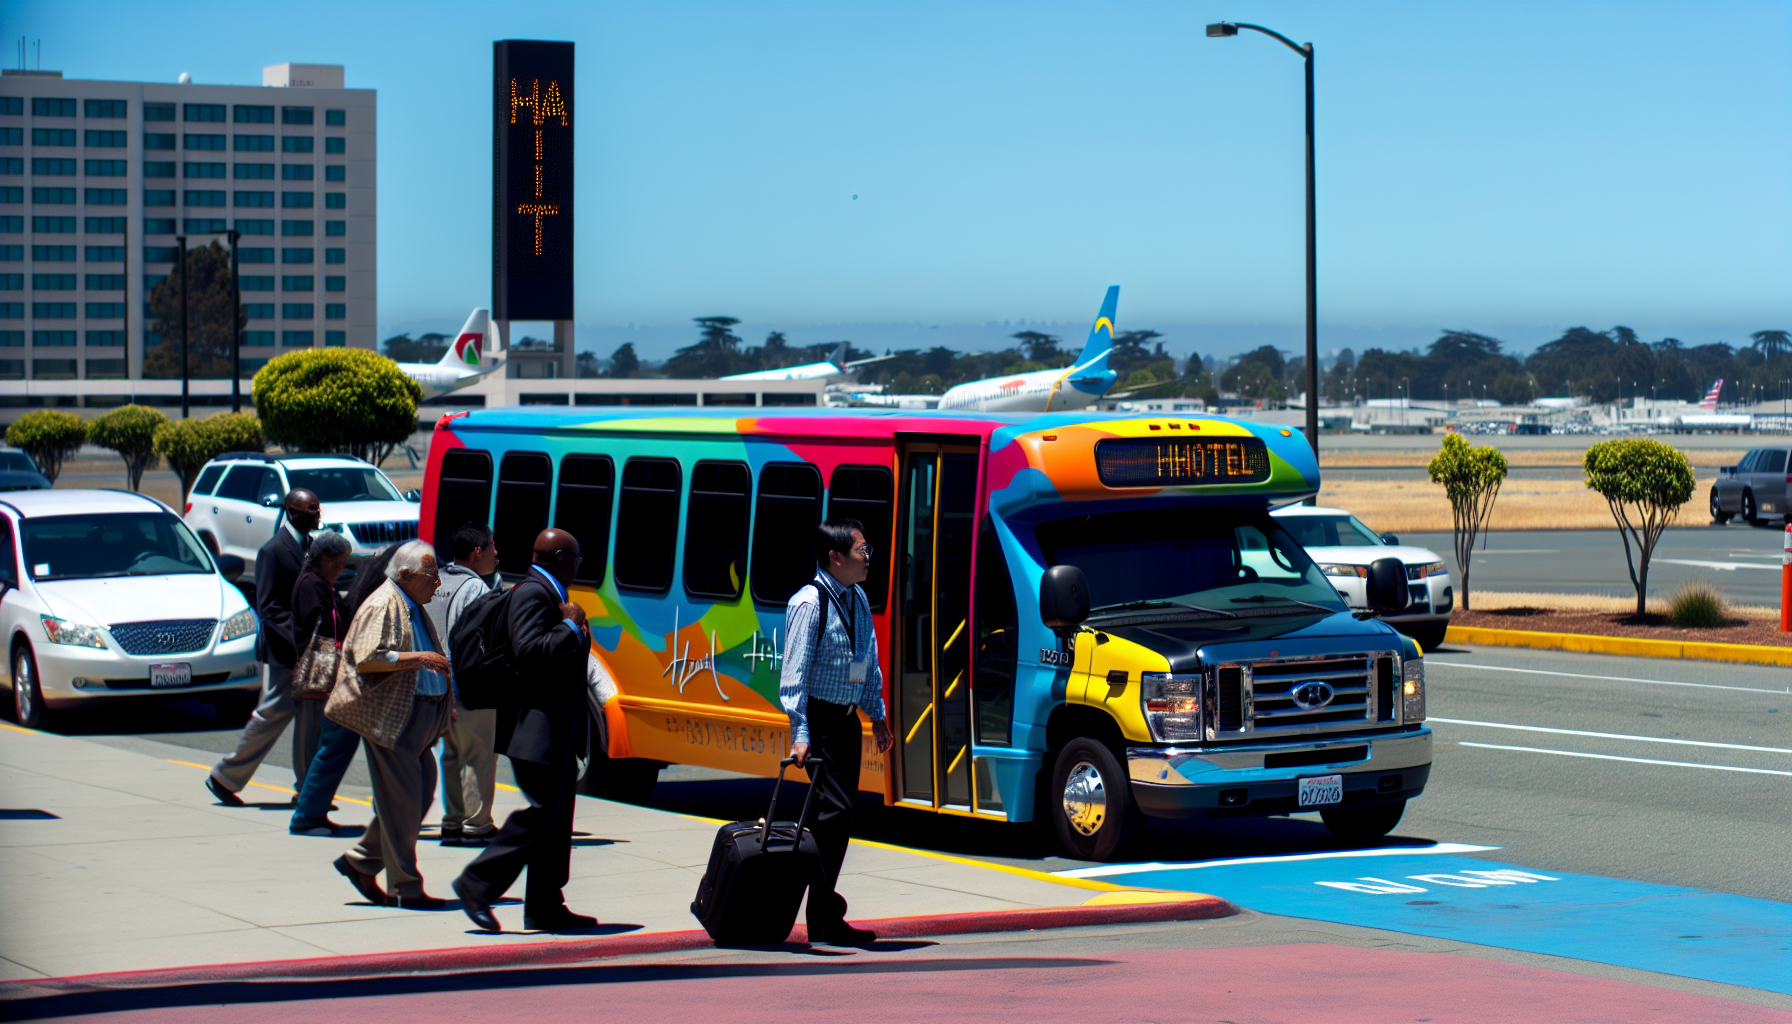 Hotel shuttle bus near San Jose International Airport